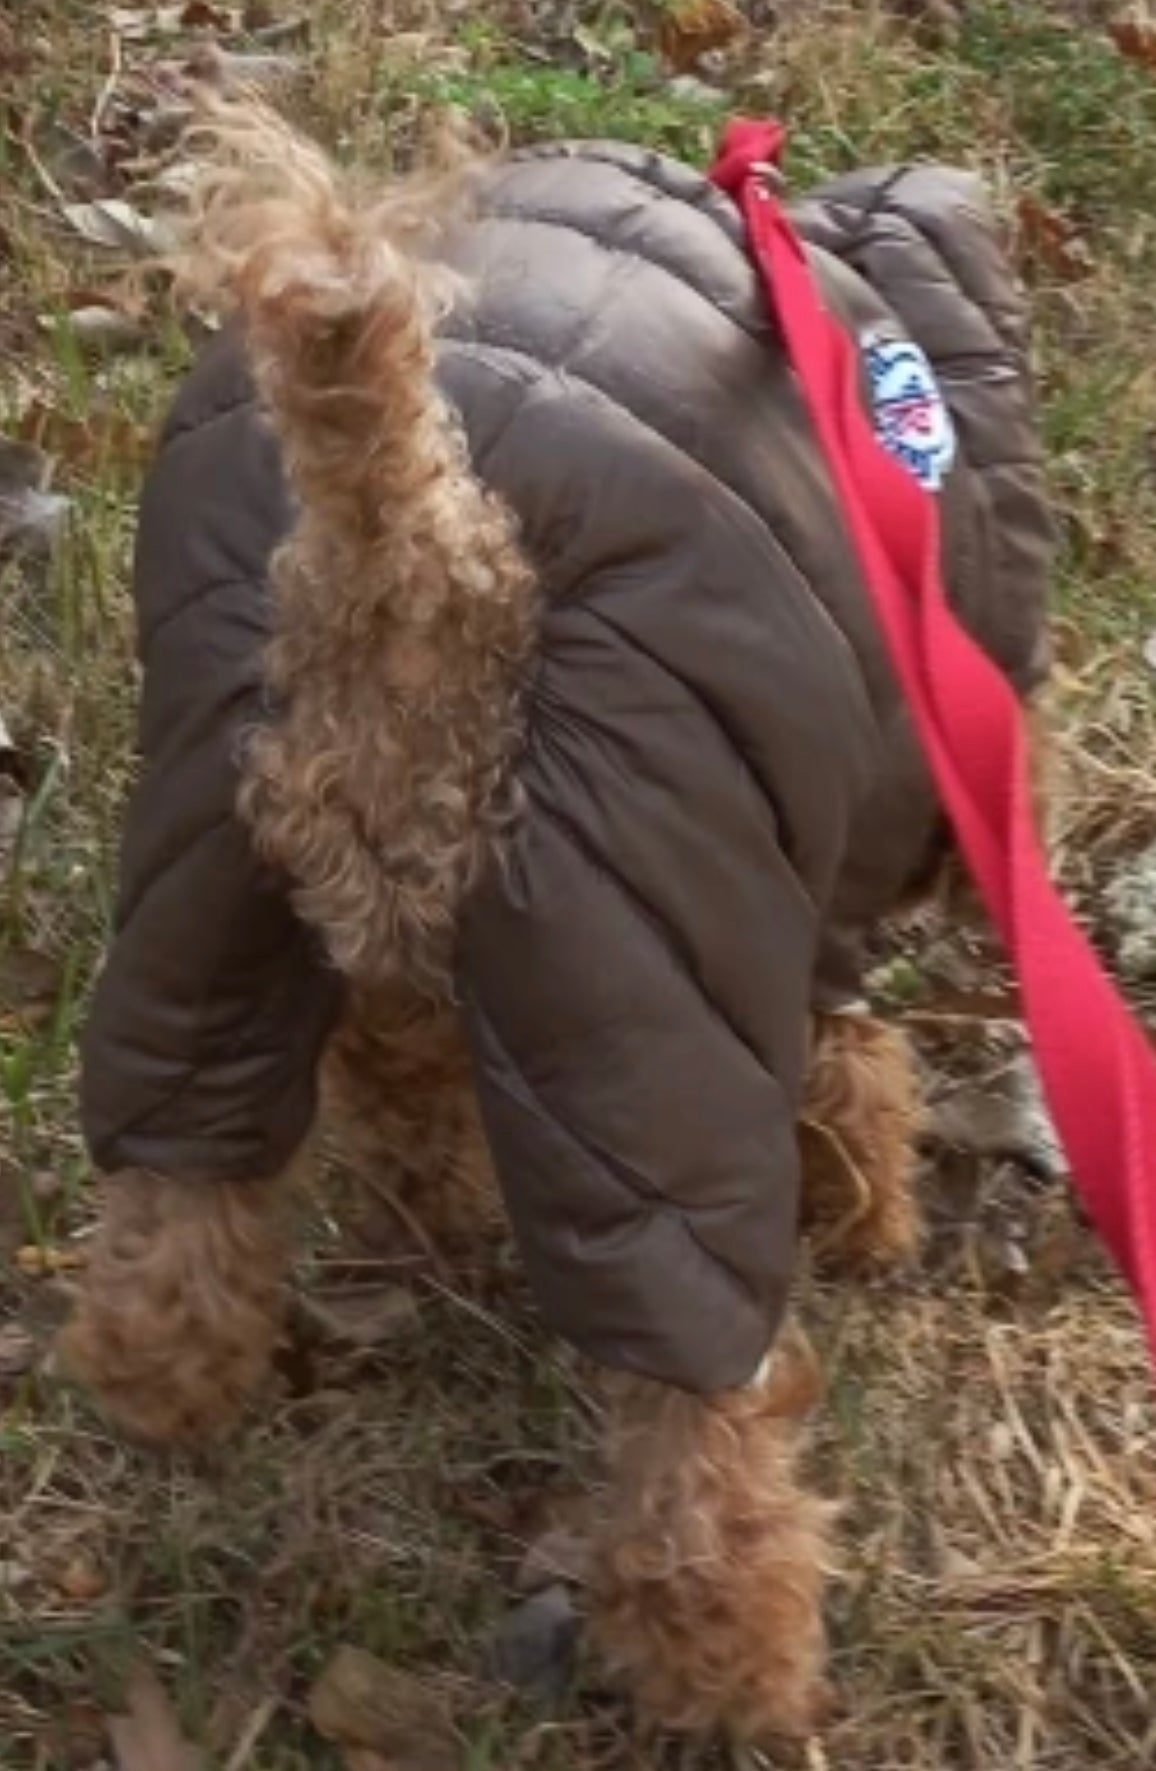 Four-legged Padded Dog Coat - Brown